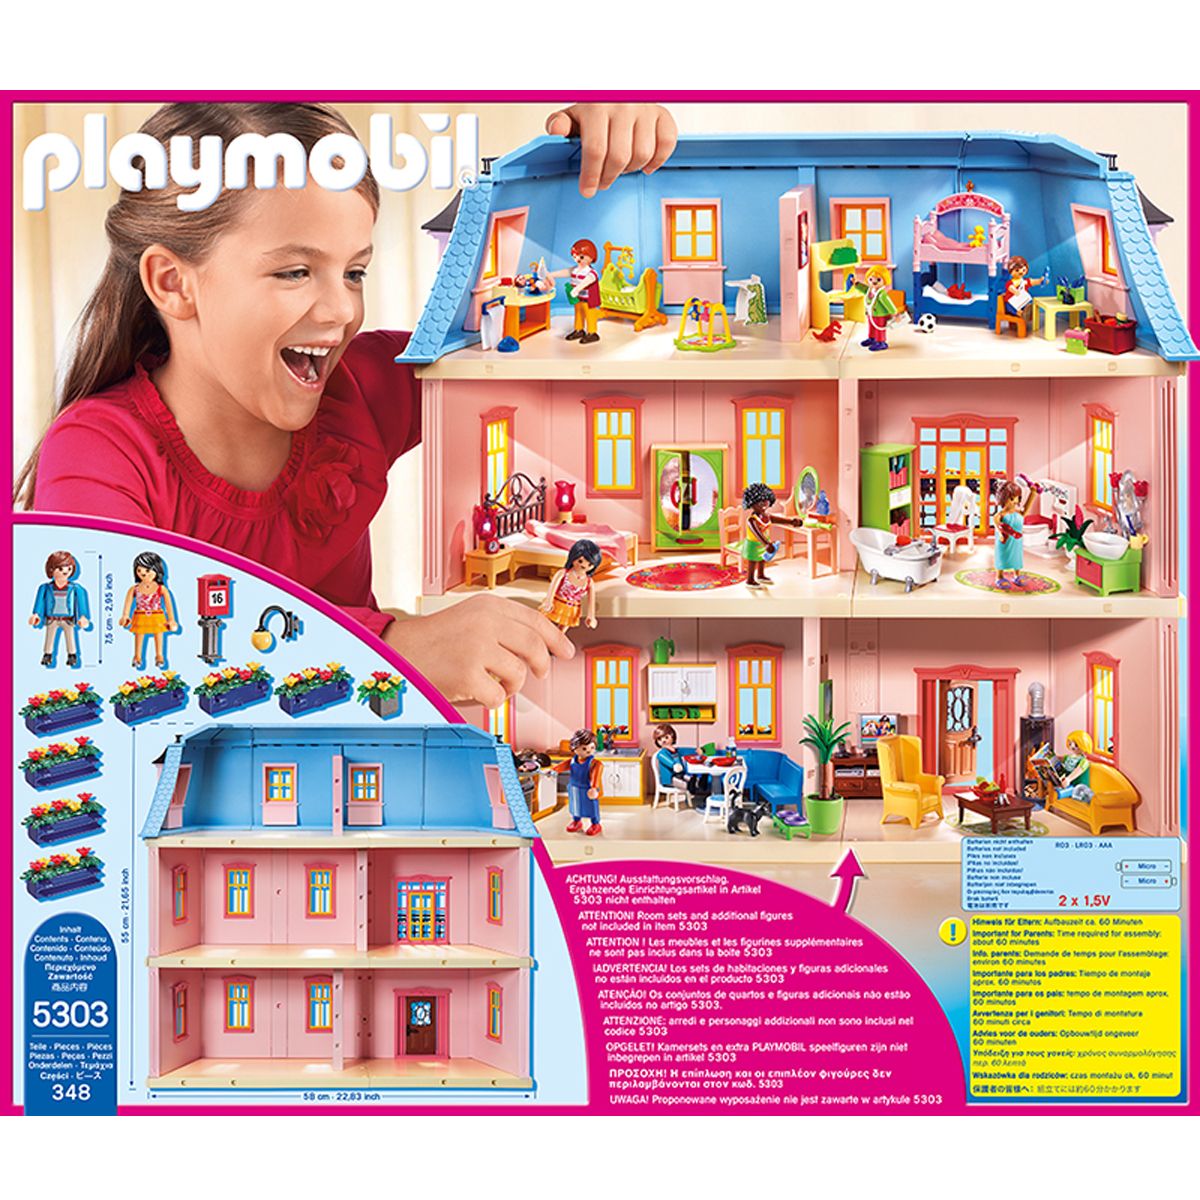 dollhouse playmobil